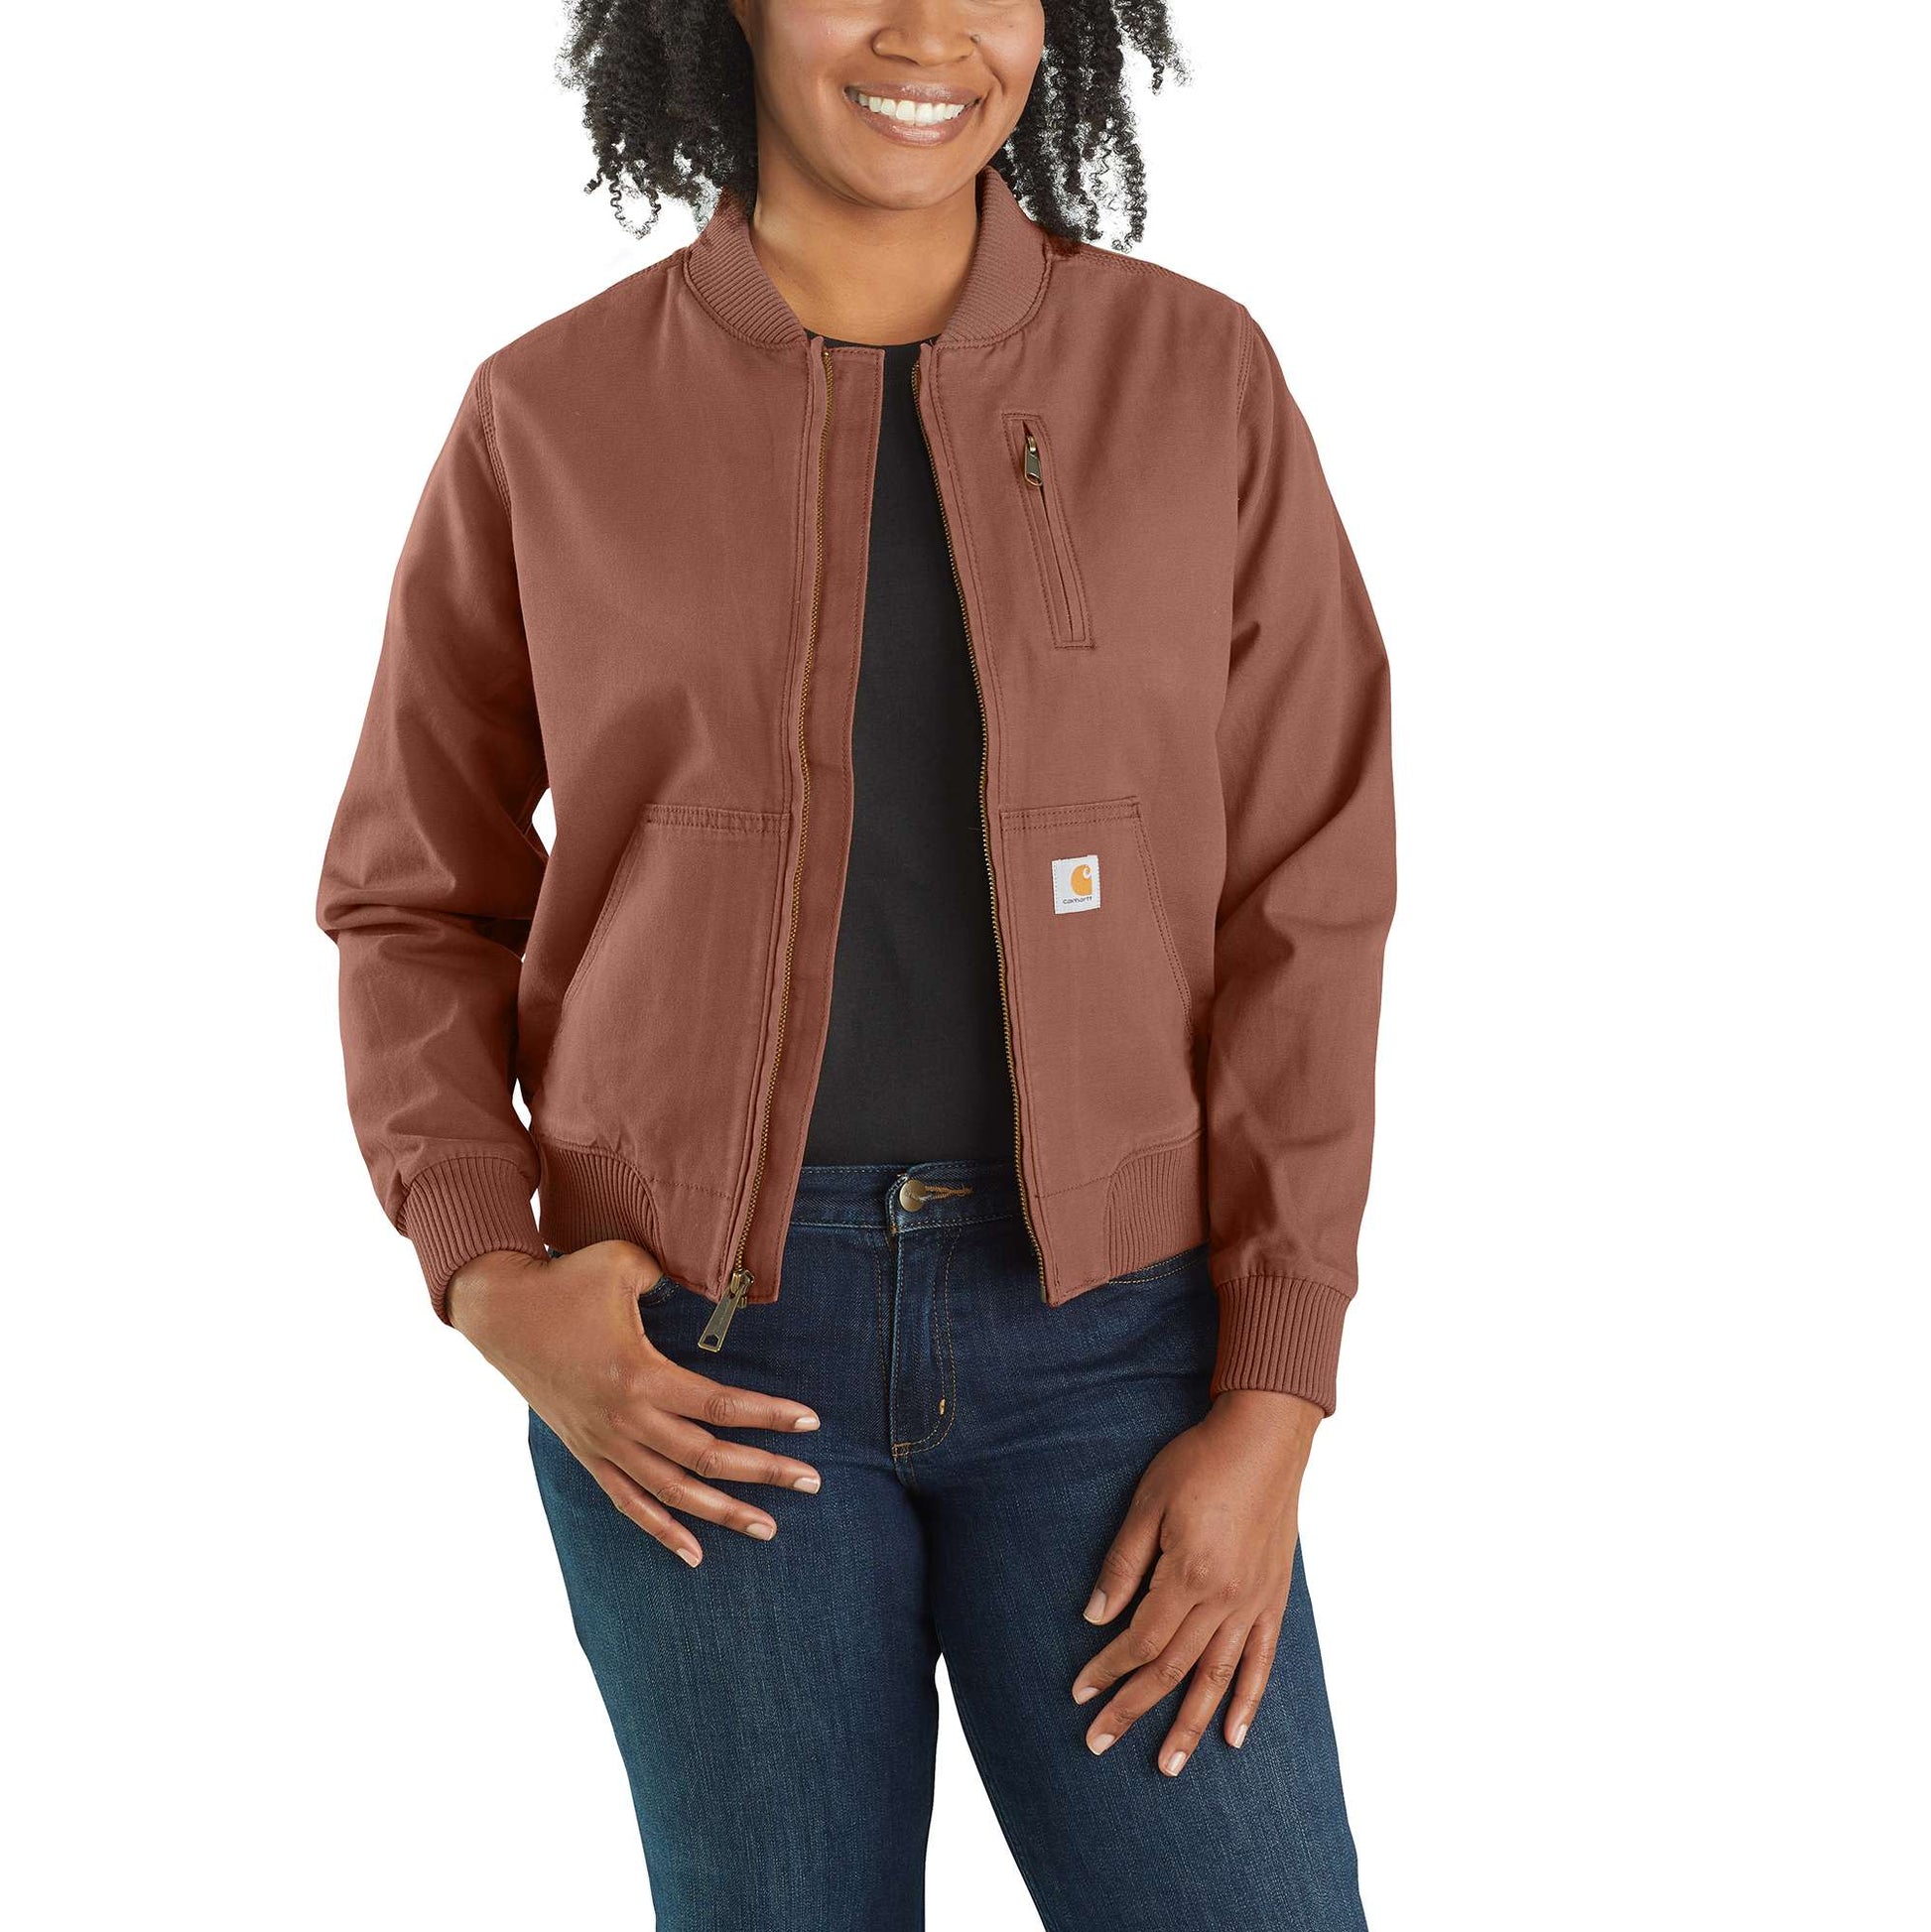 Carhartt Women's Rugged Flex Crawford Jacket, Product